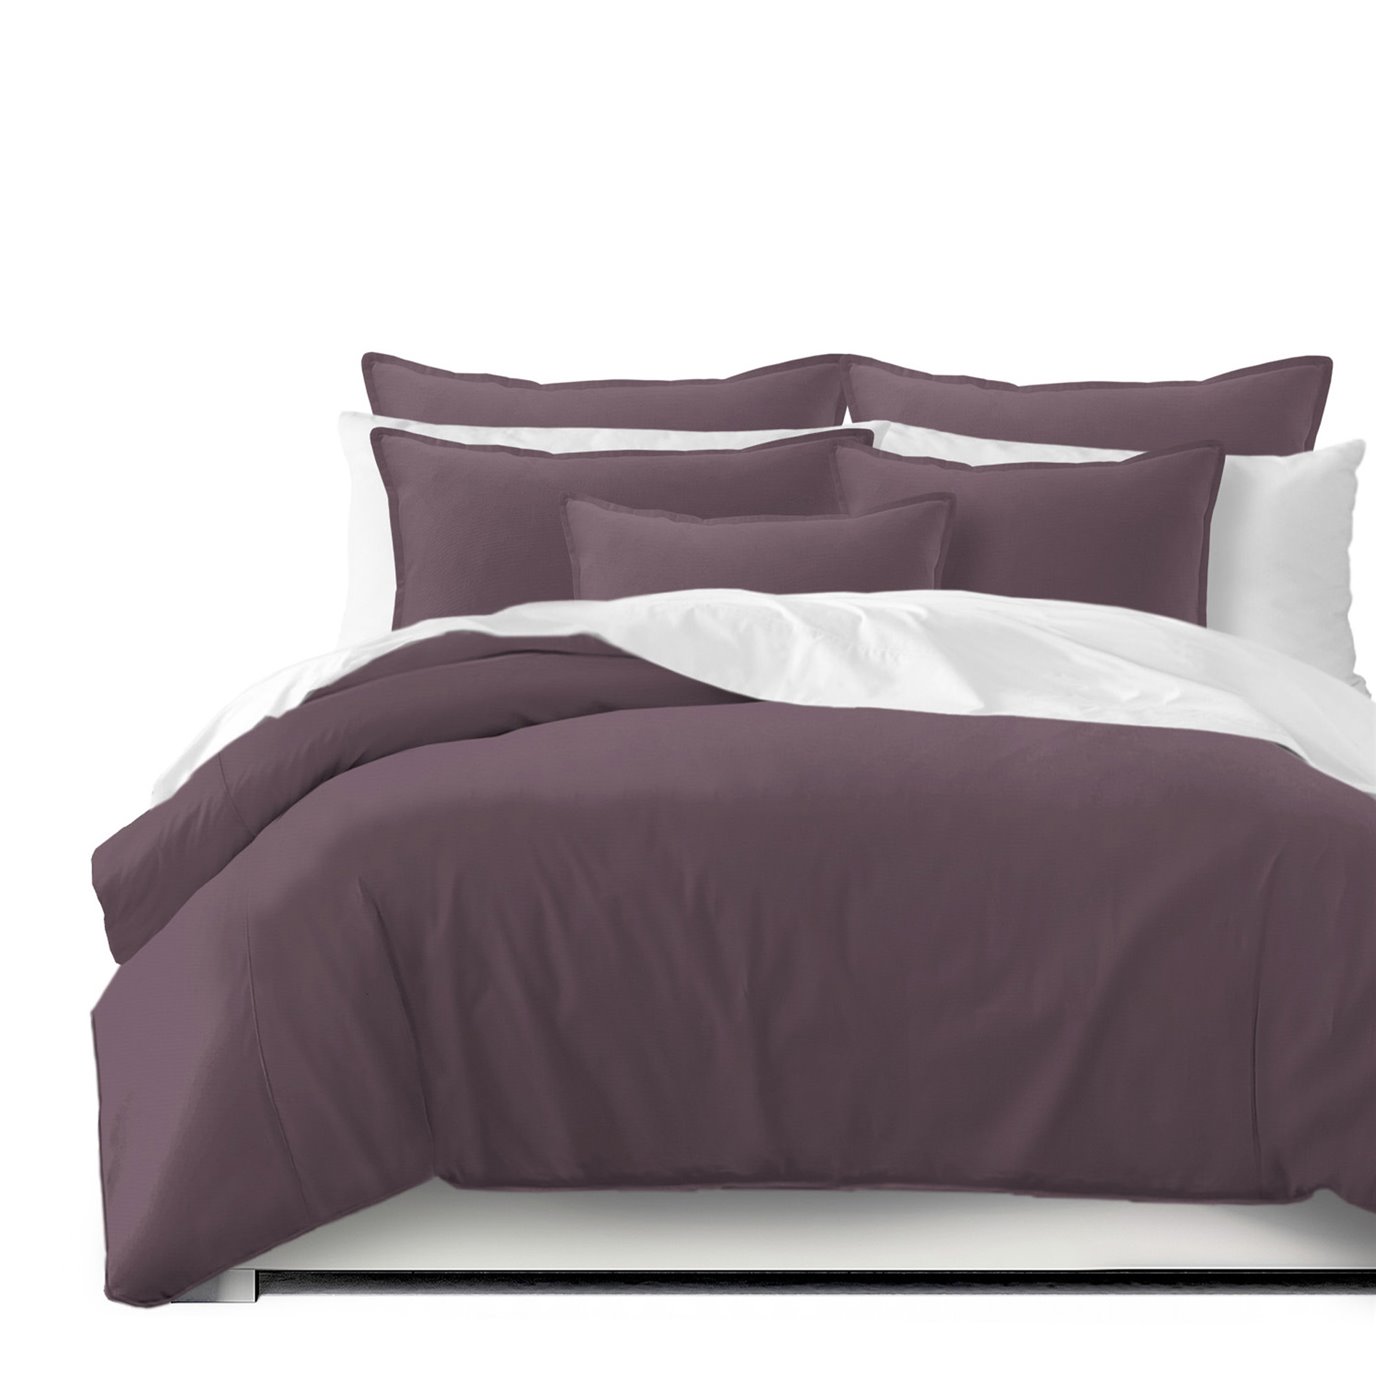 Braxton Purple Grape Coverlet and Pillow Sham(s) Set - Size Twin